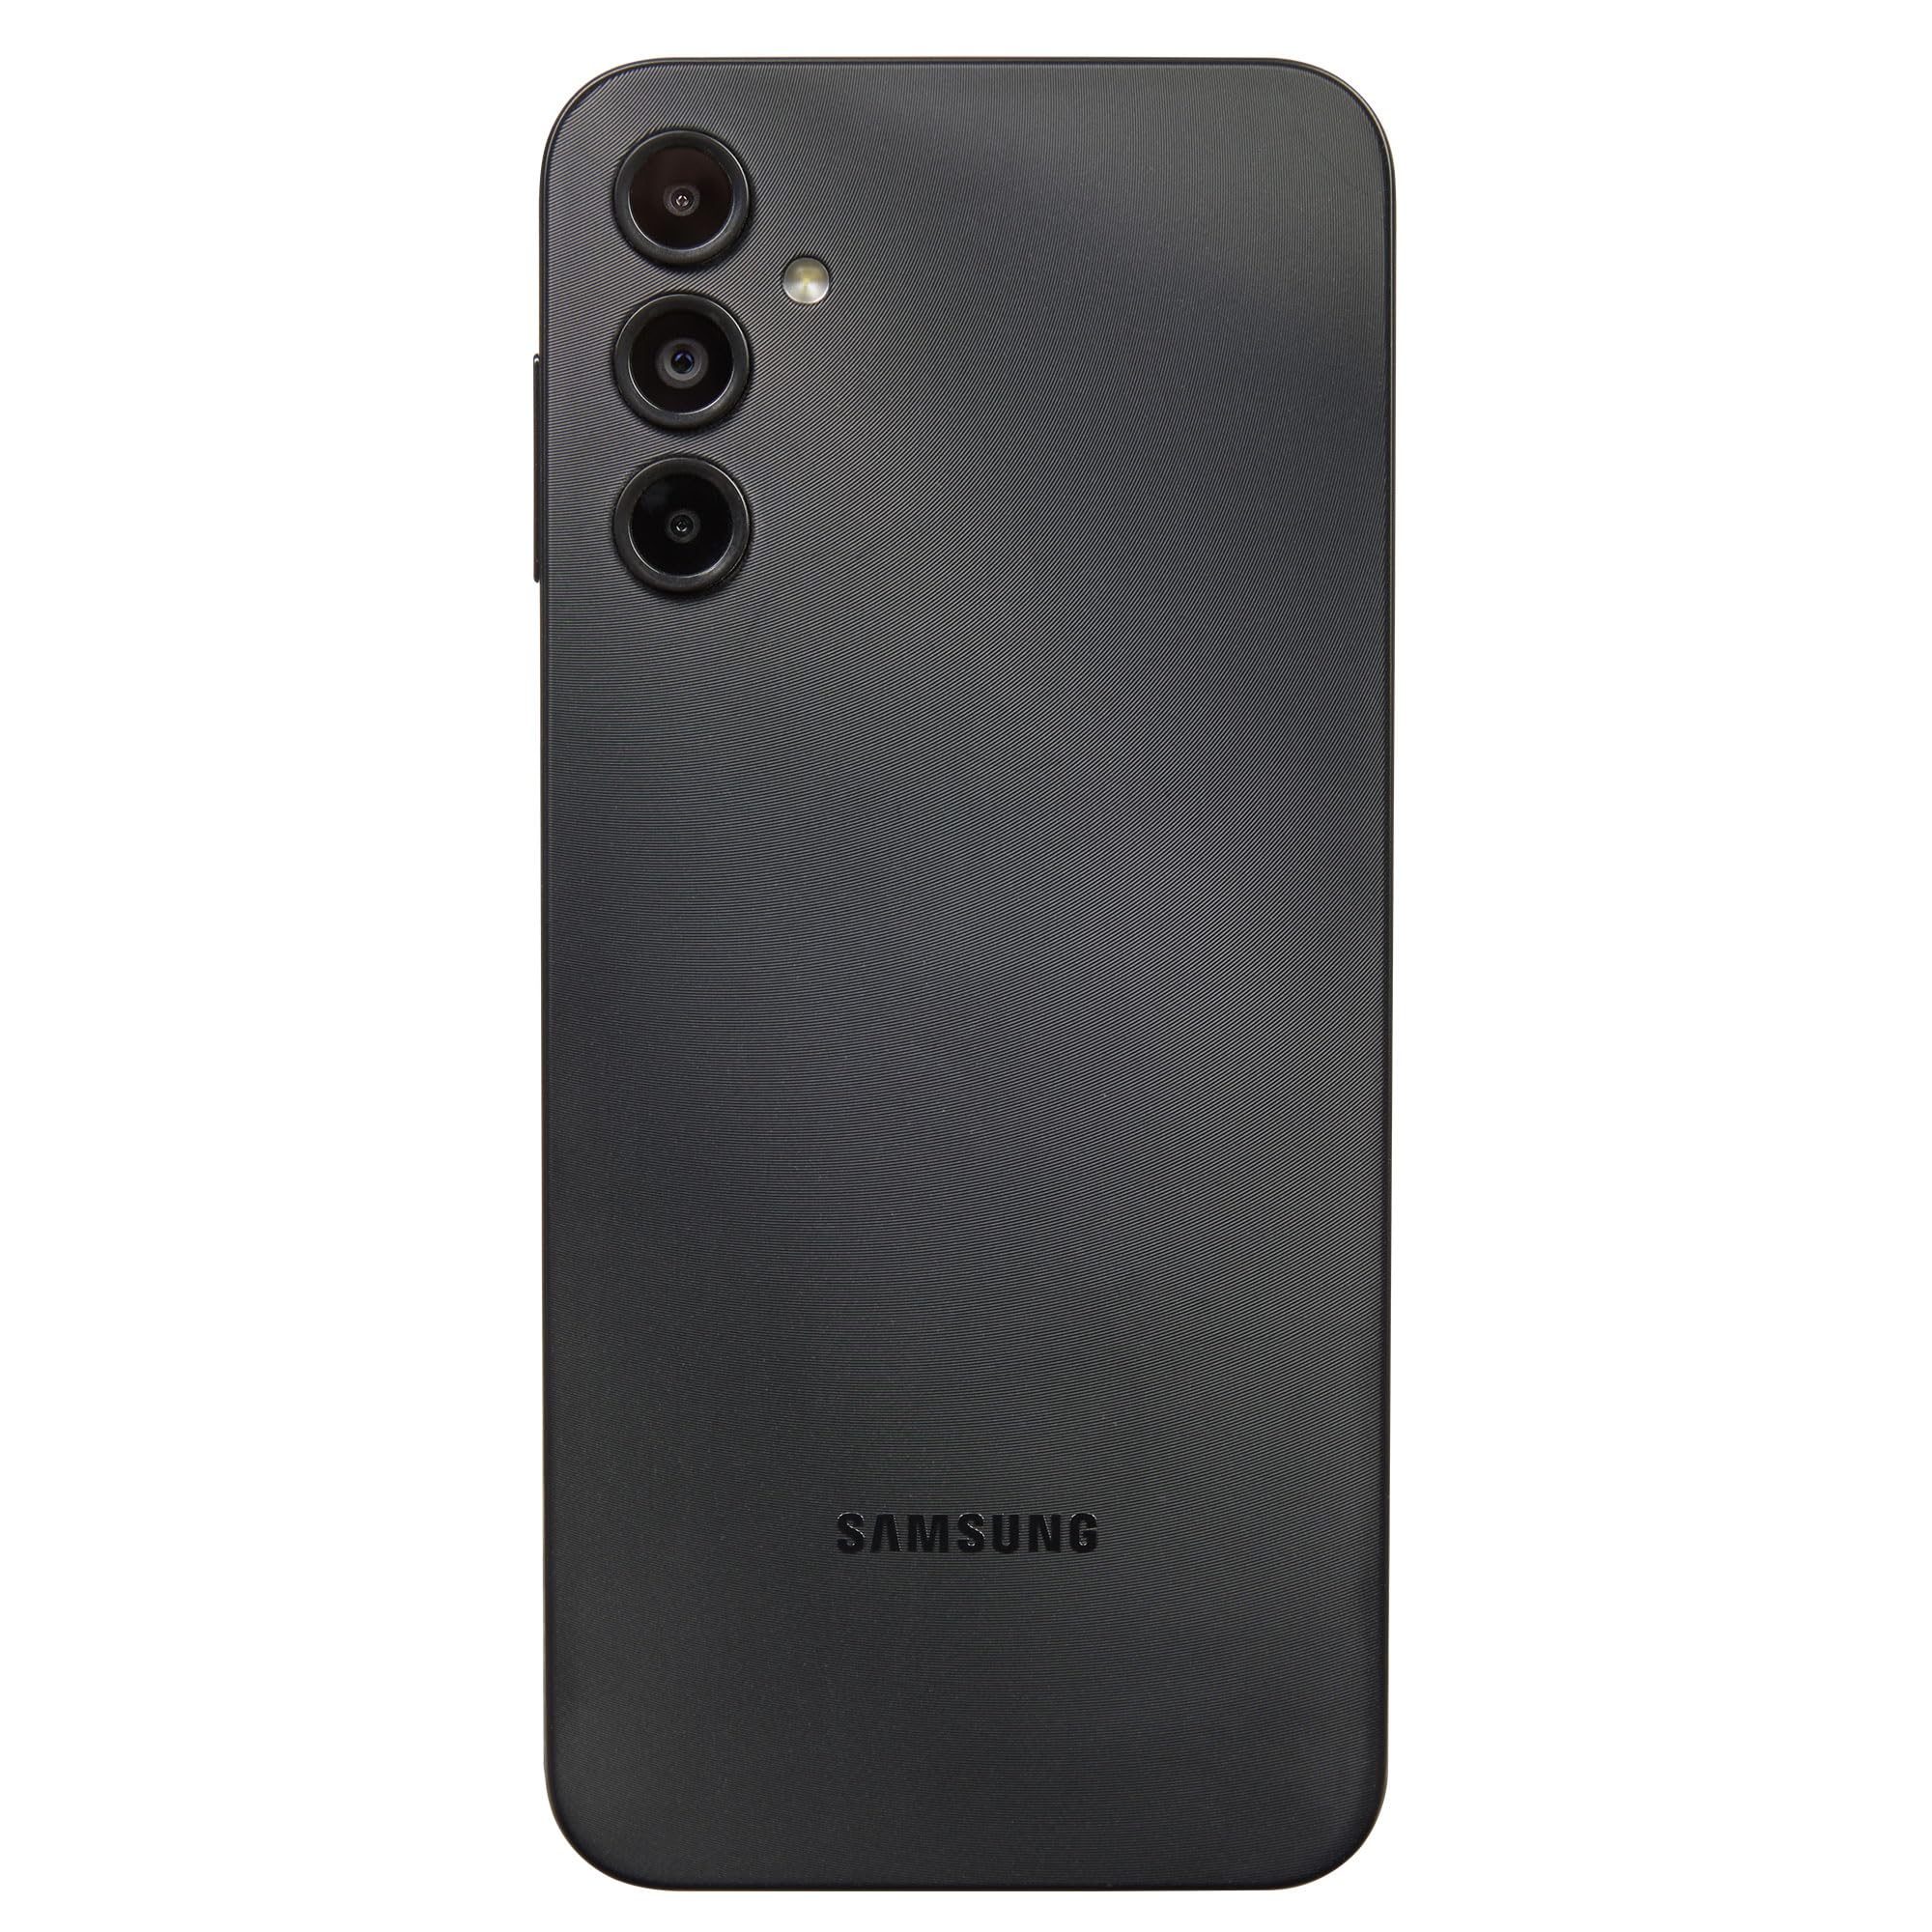 Total by Verizon Samsung Galaxy A14 5G, 64GB, Black - Prepaid Smartphone (Locked)